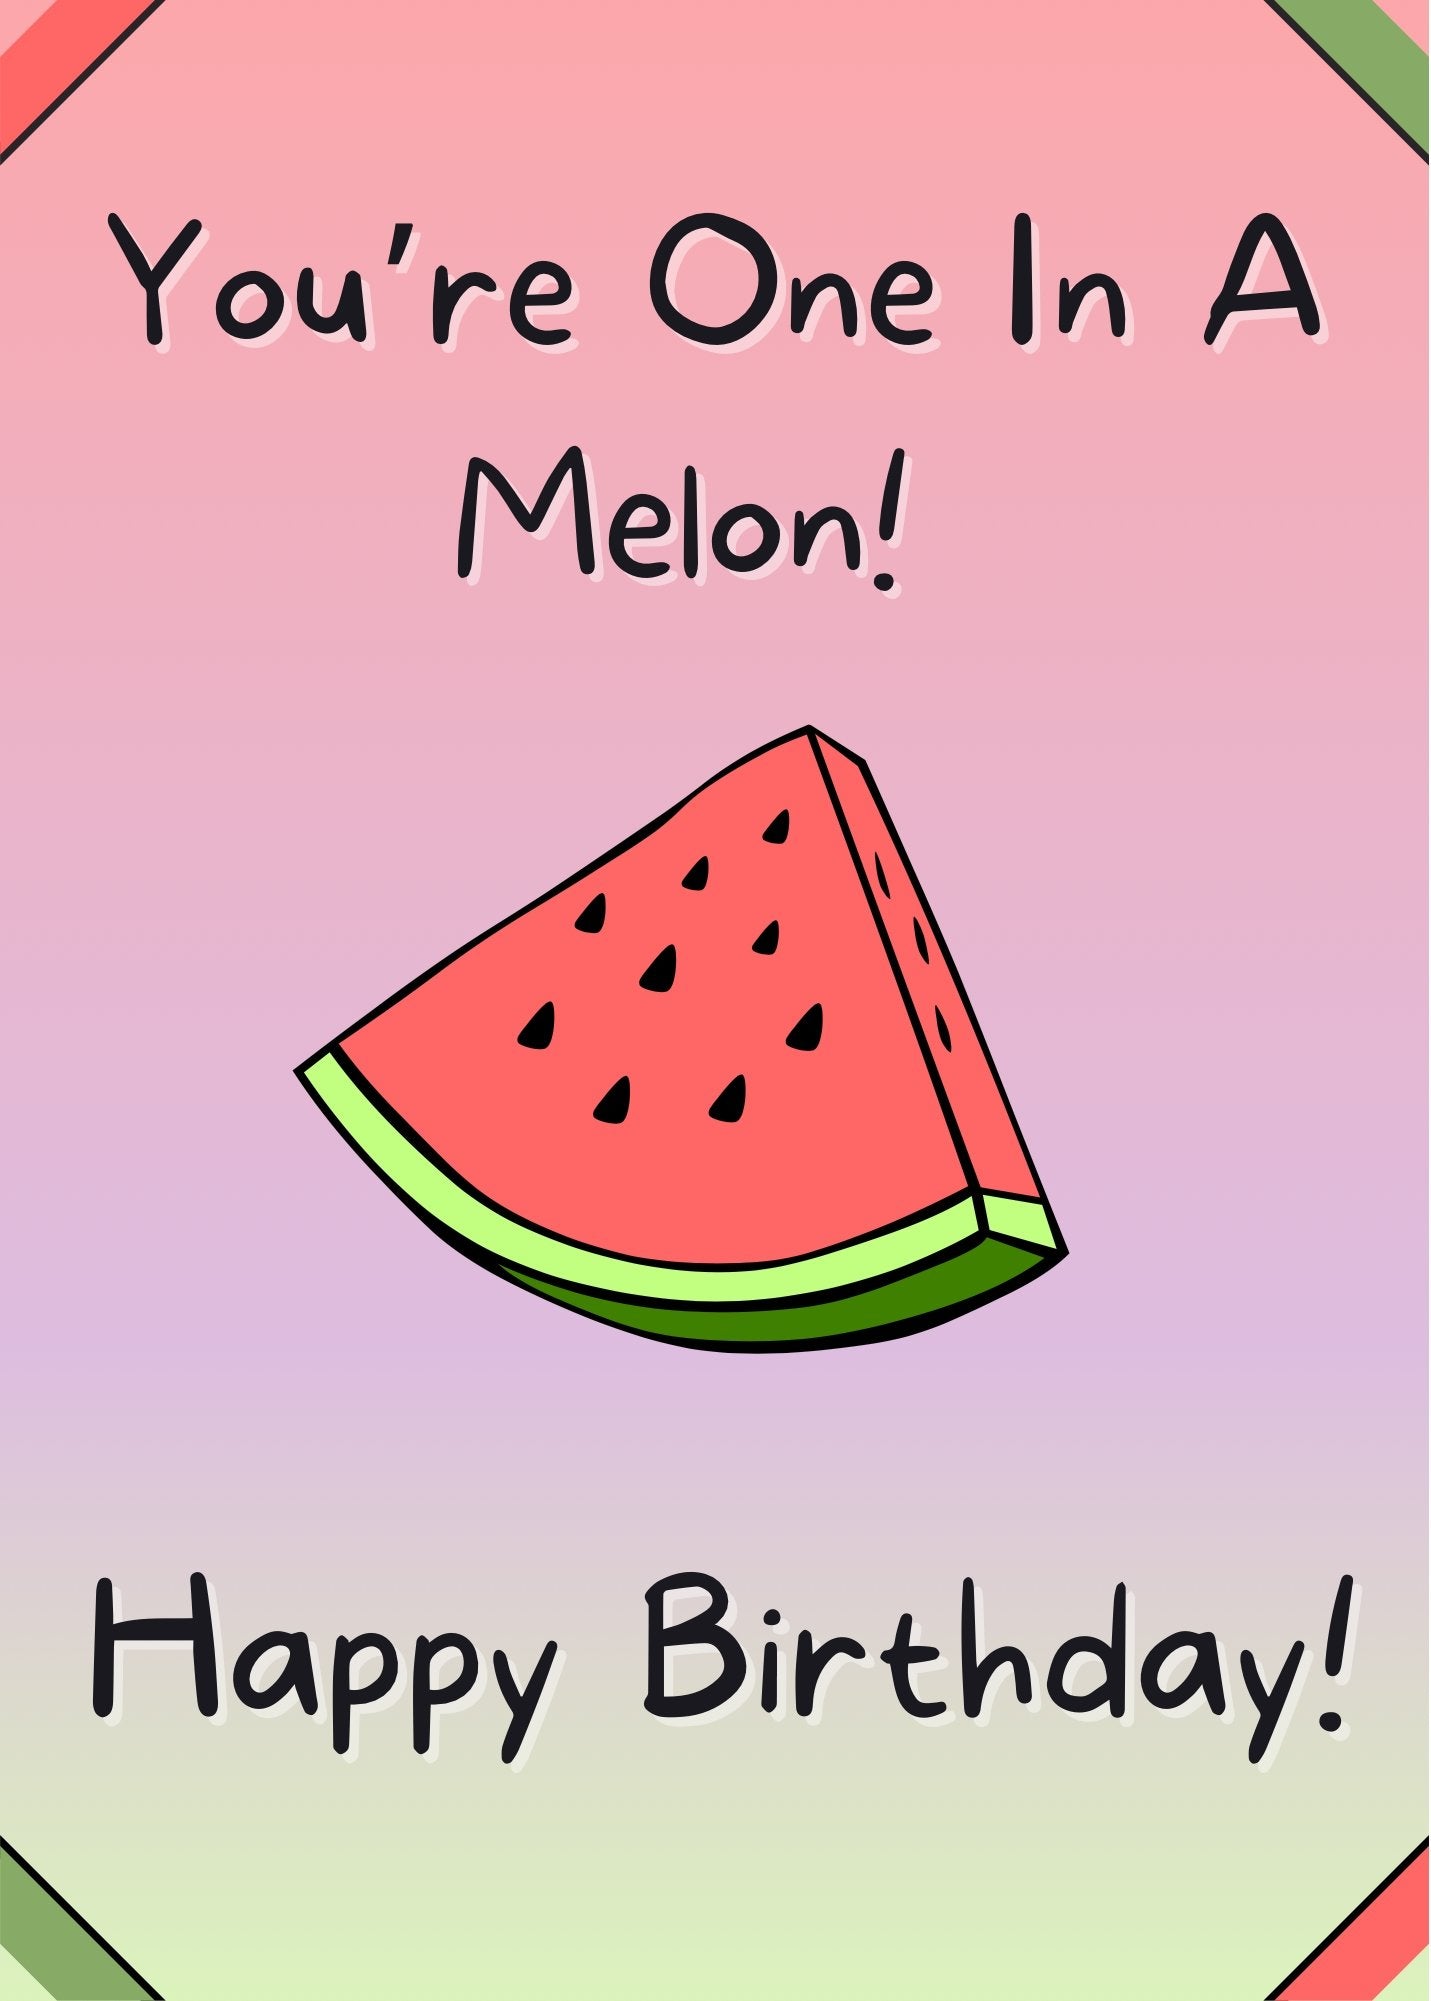 “One In A Melon” Happy Birthday Card Template (Digital Download) Digital Artwork Weaver Custom Engravings Digital Downloads   